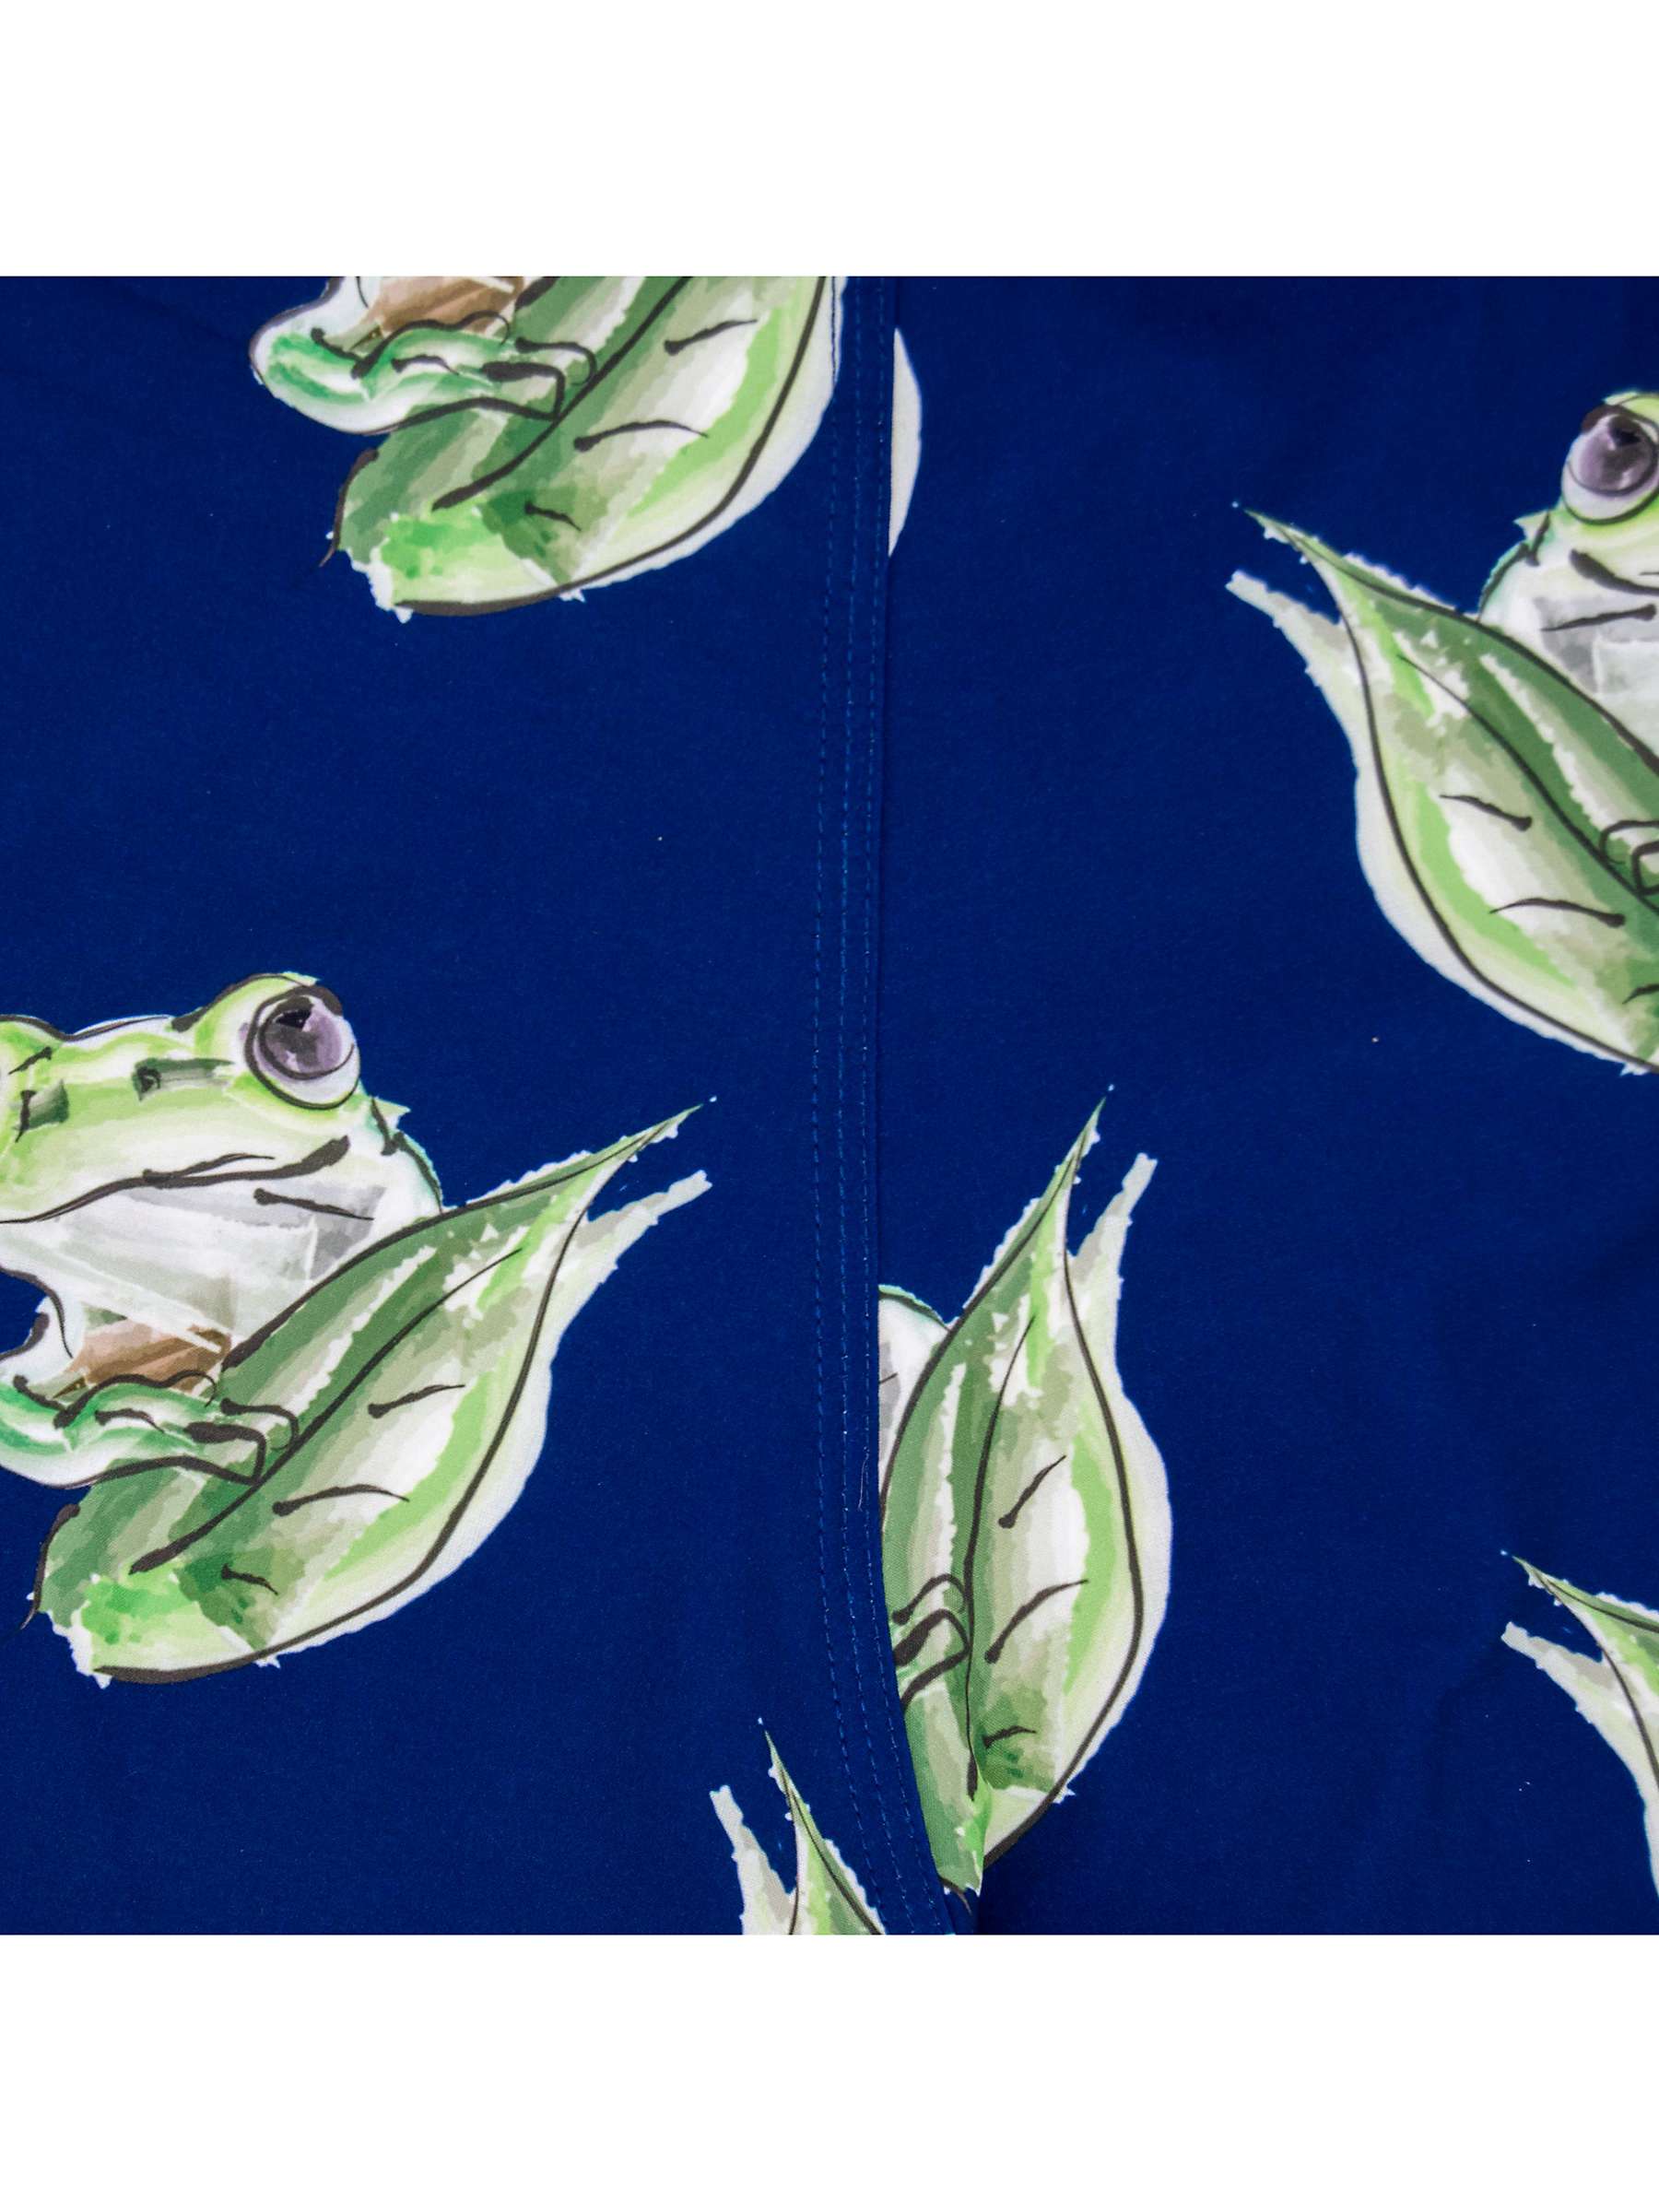 Buy Randy Cow Frogs Print Swim Shorts, Blue/Multi Online at johnlewis.com